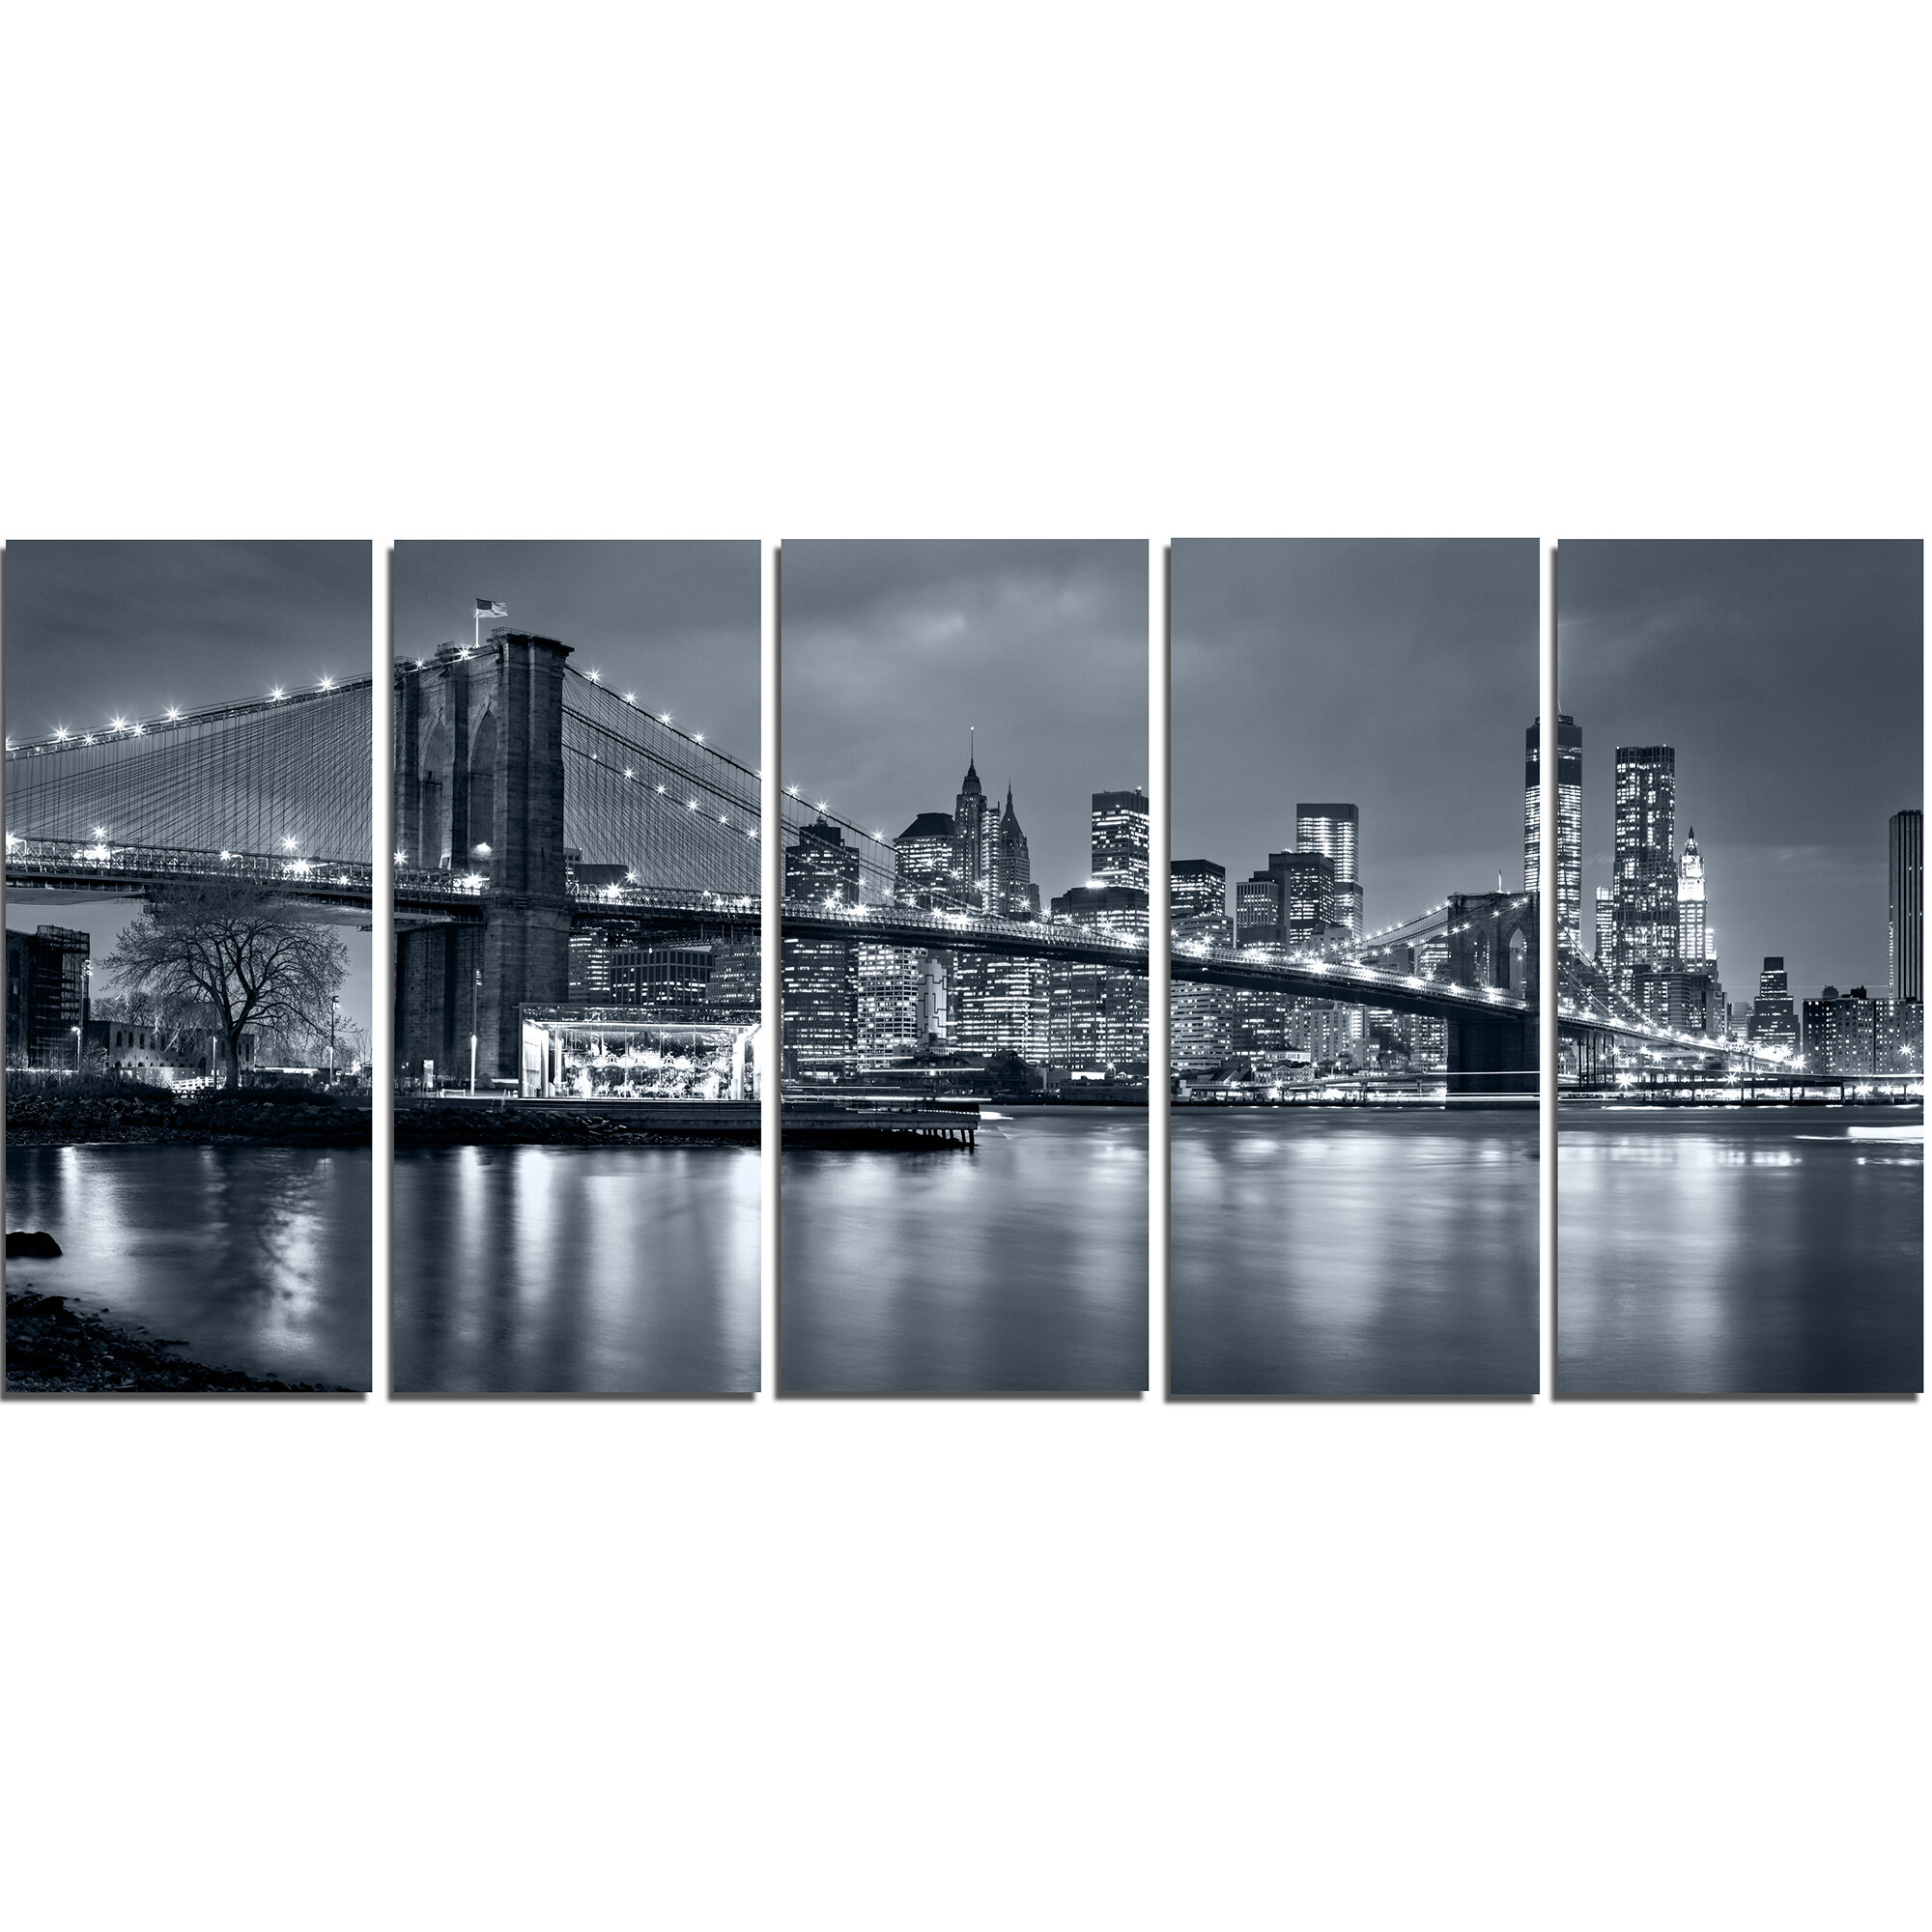 New York City Night Skyline Panoramic Picture Canvas Print Home Decor Wall Art 